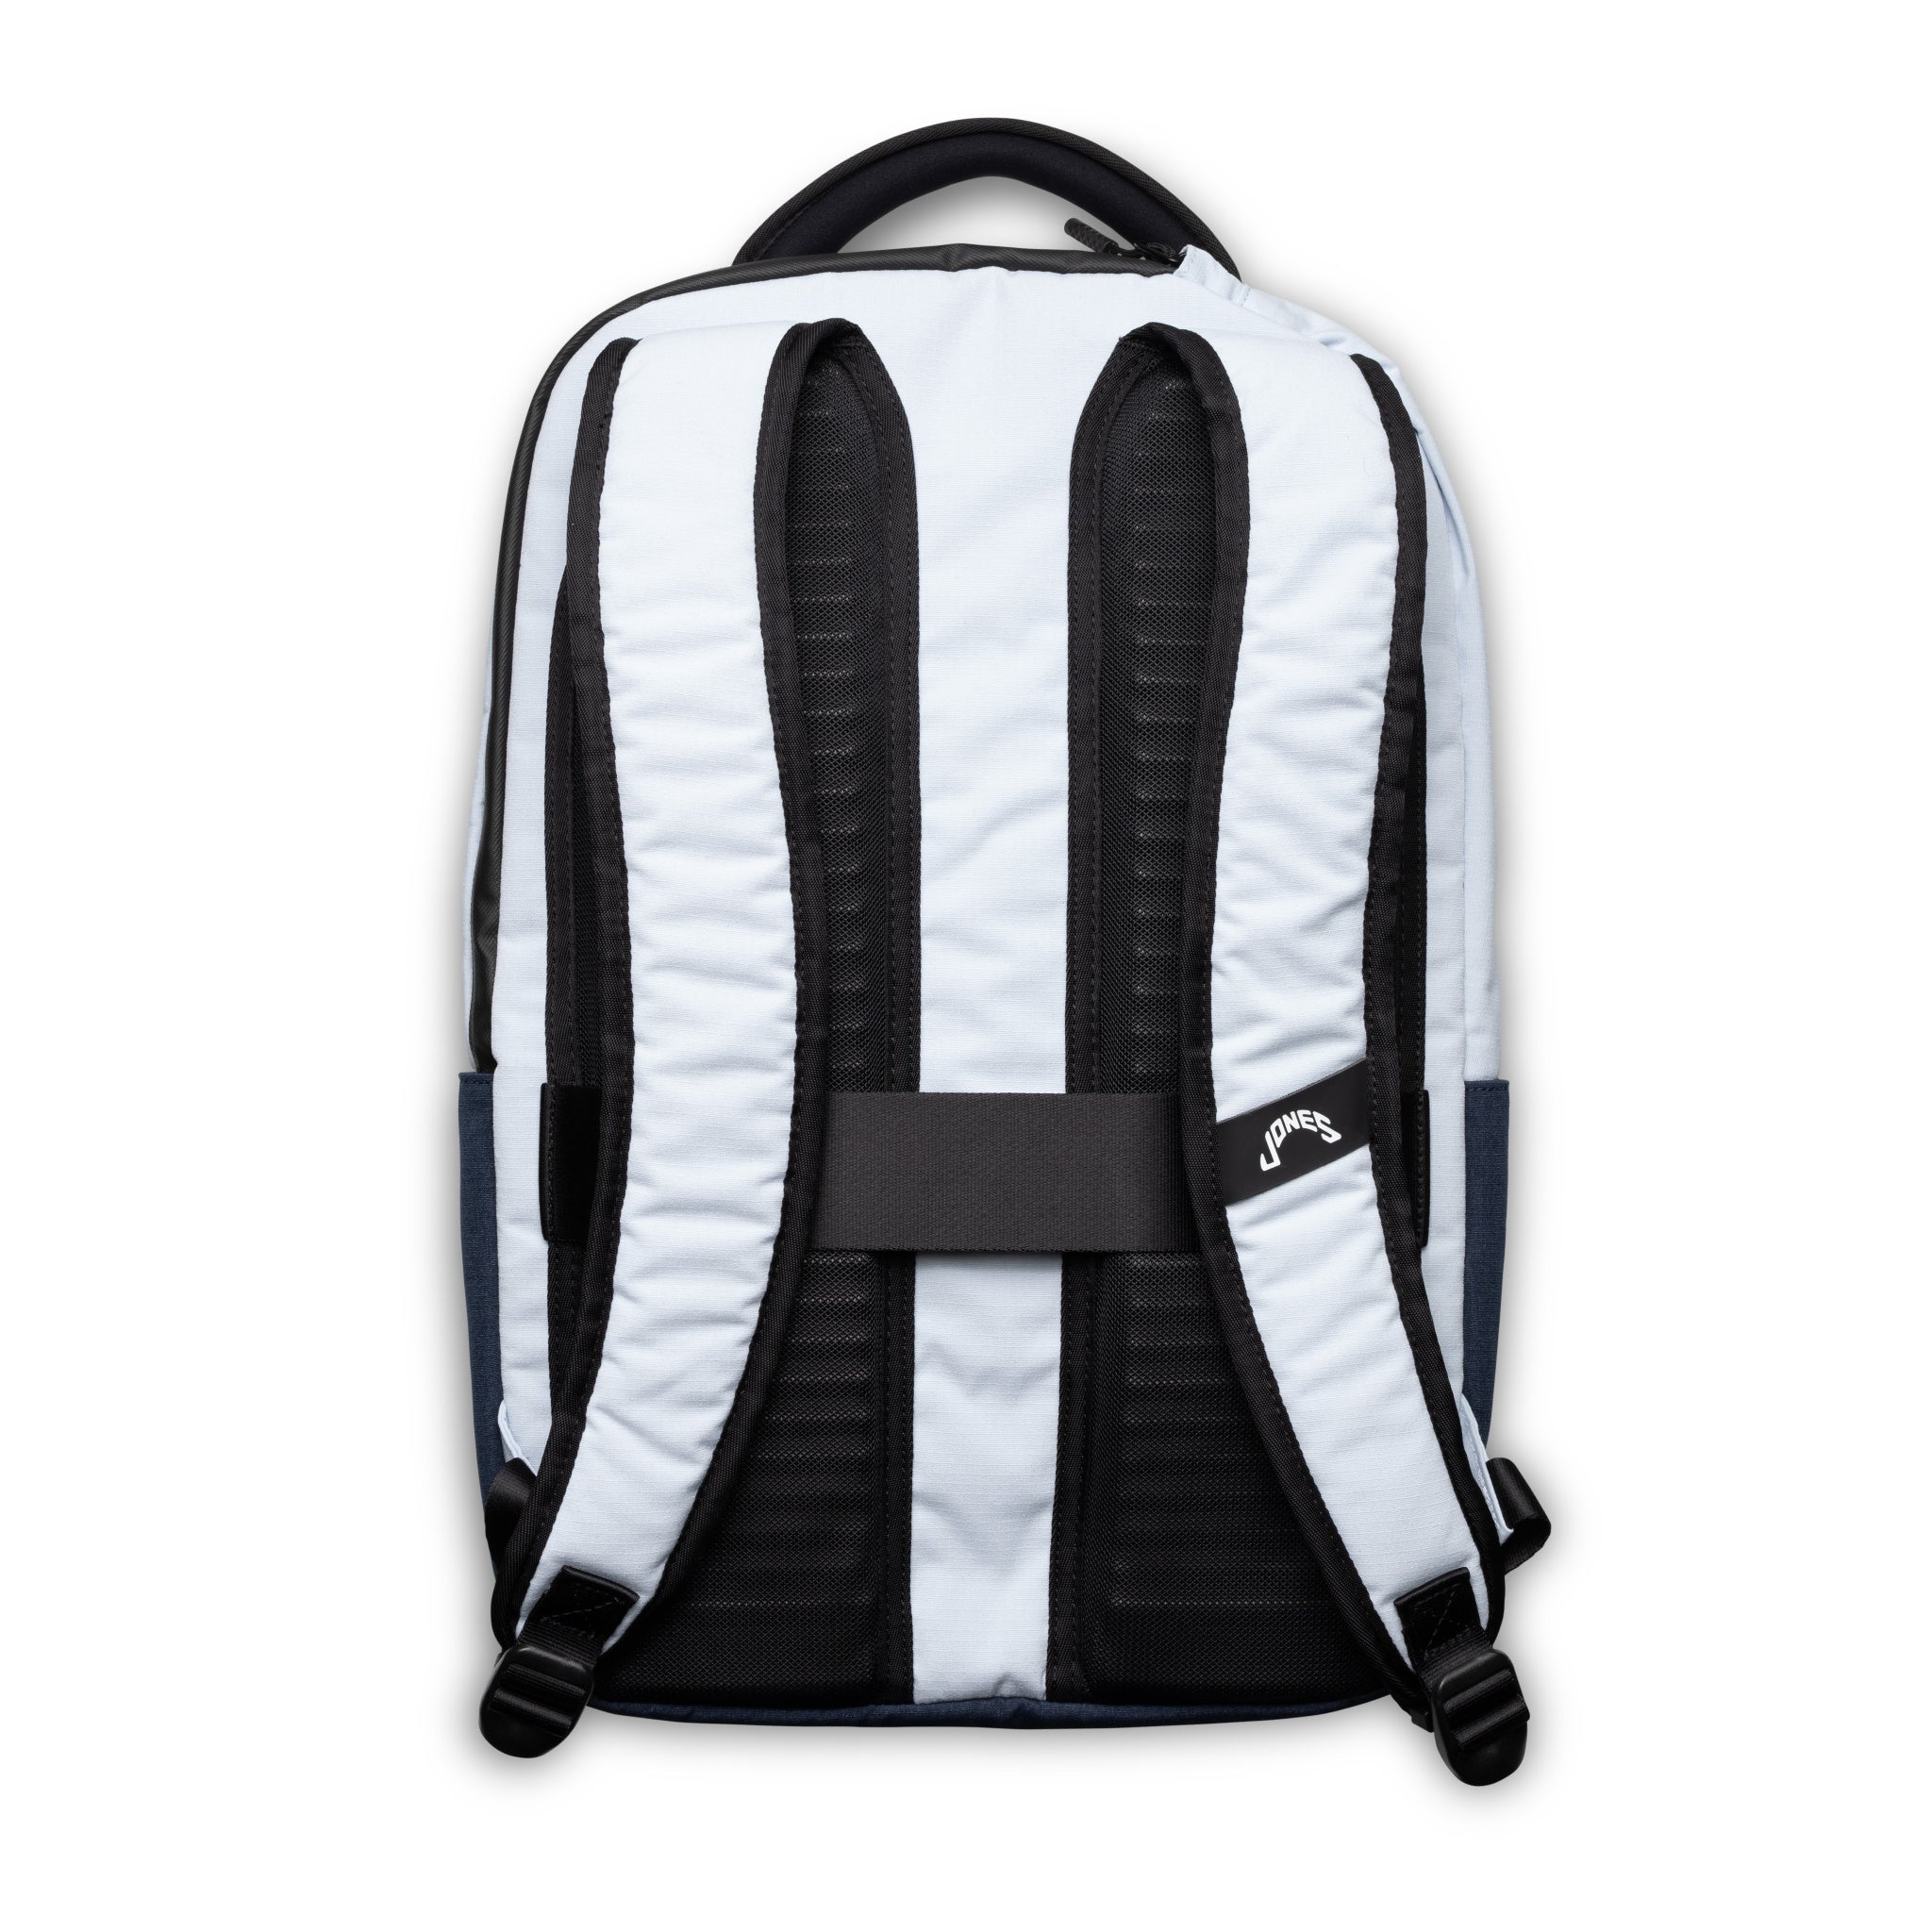 Jones Sports Co. A2 Backpack - Soft Blue/Navy